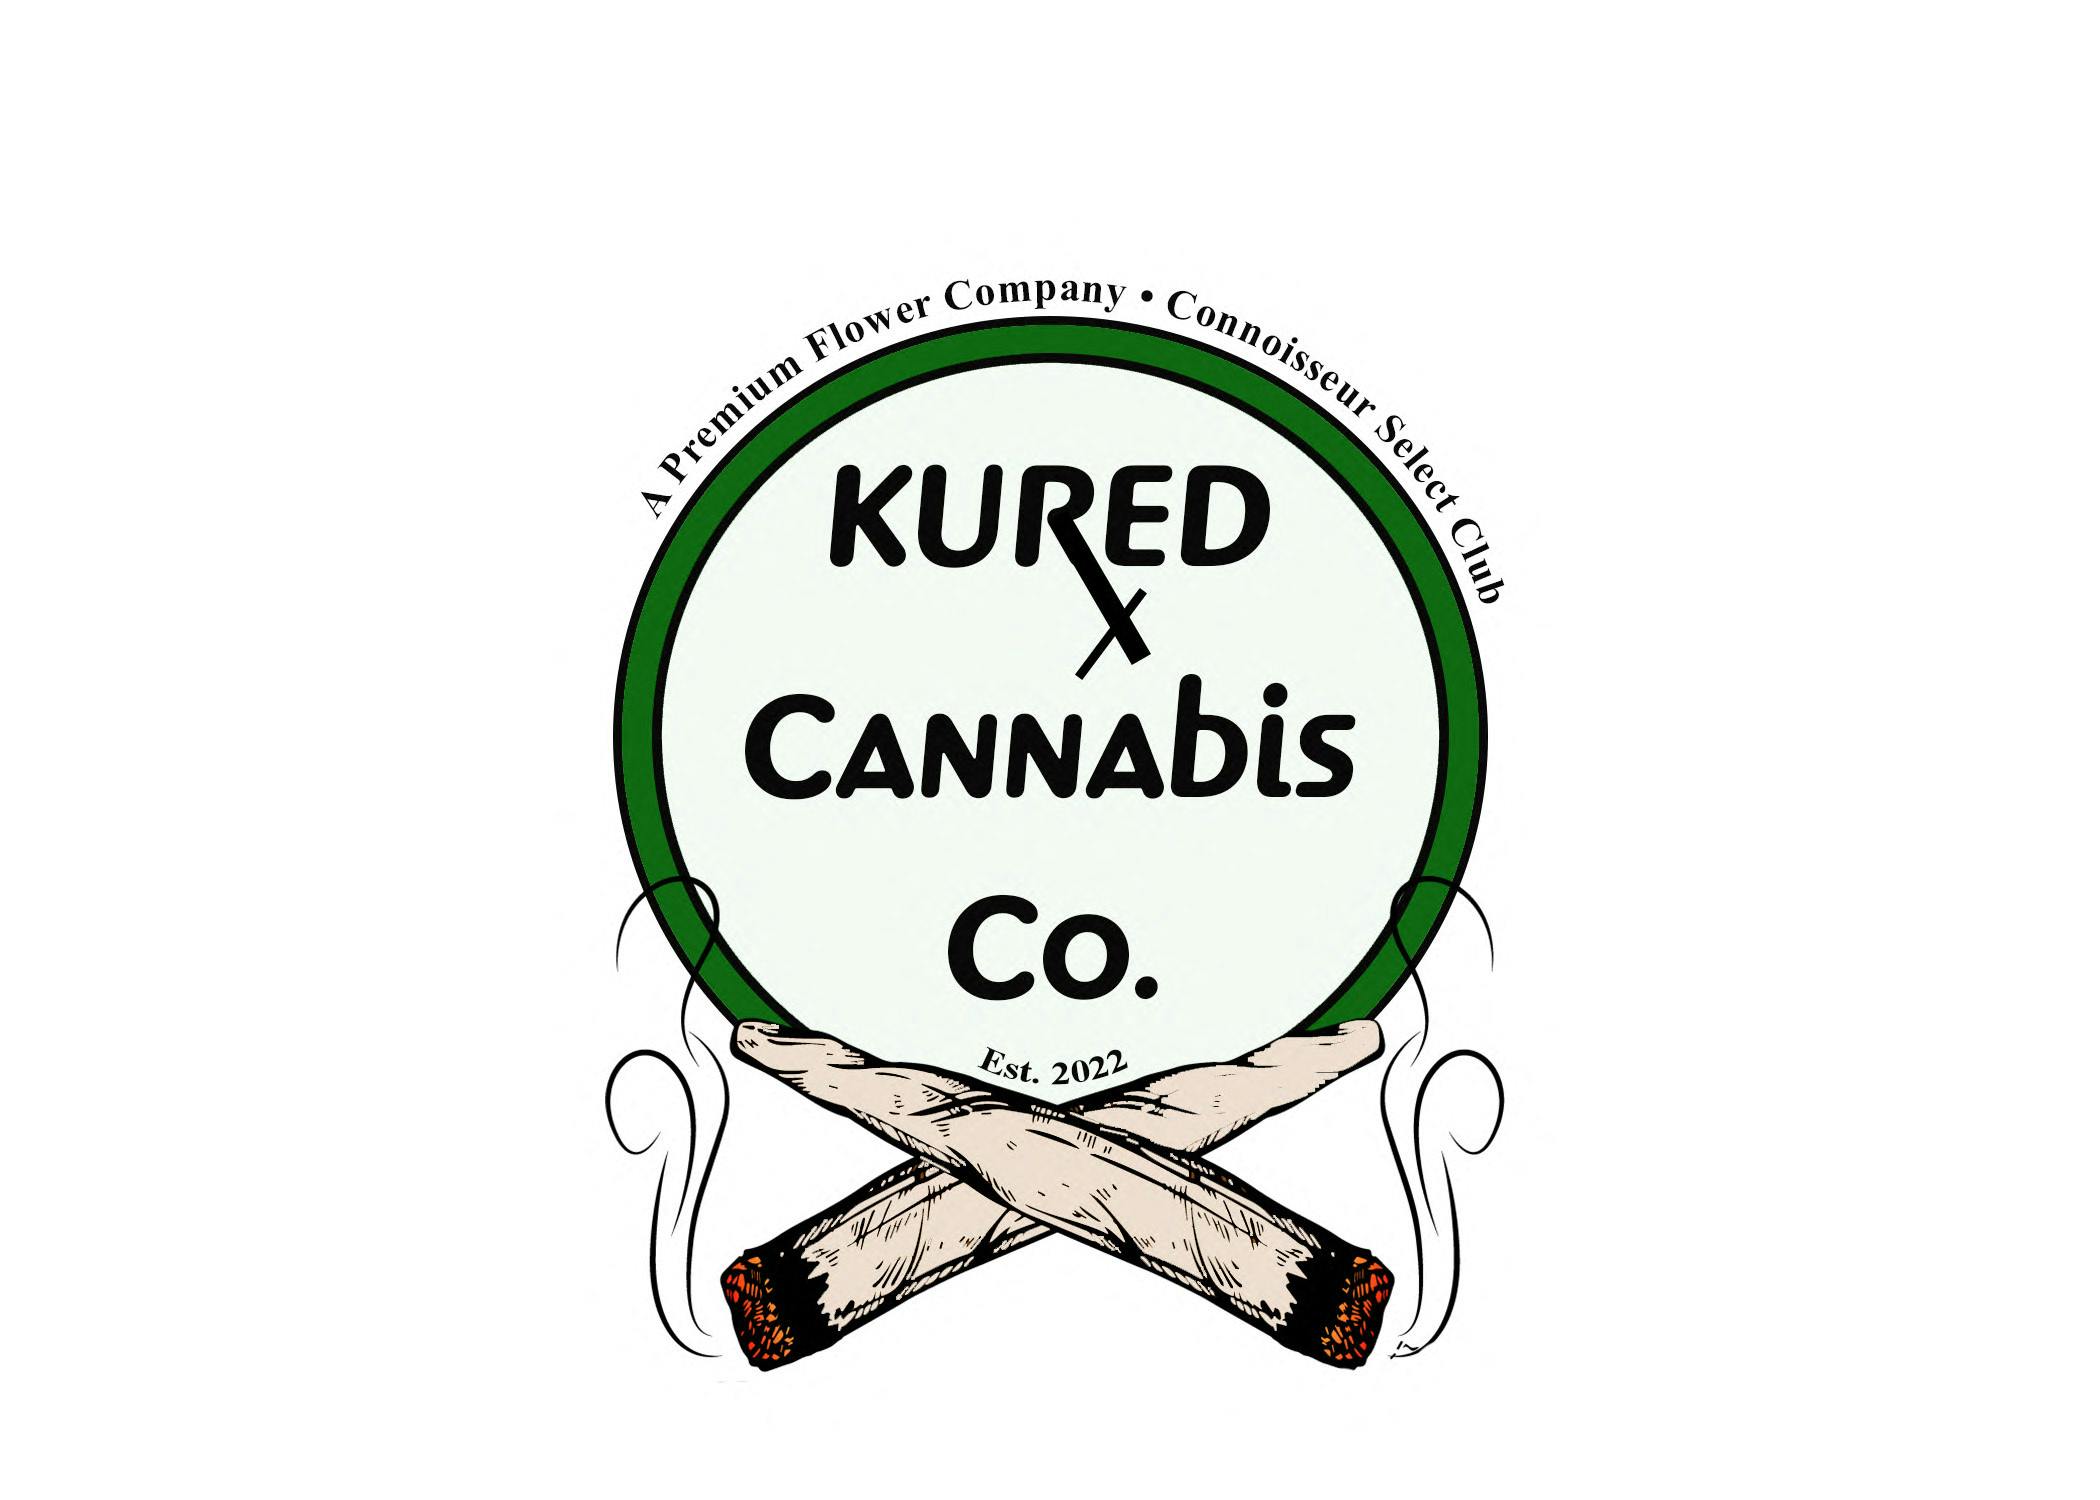 Kured Cannabis Co.